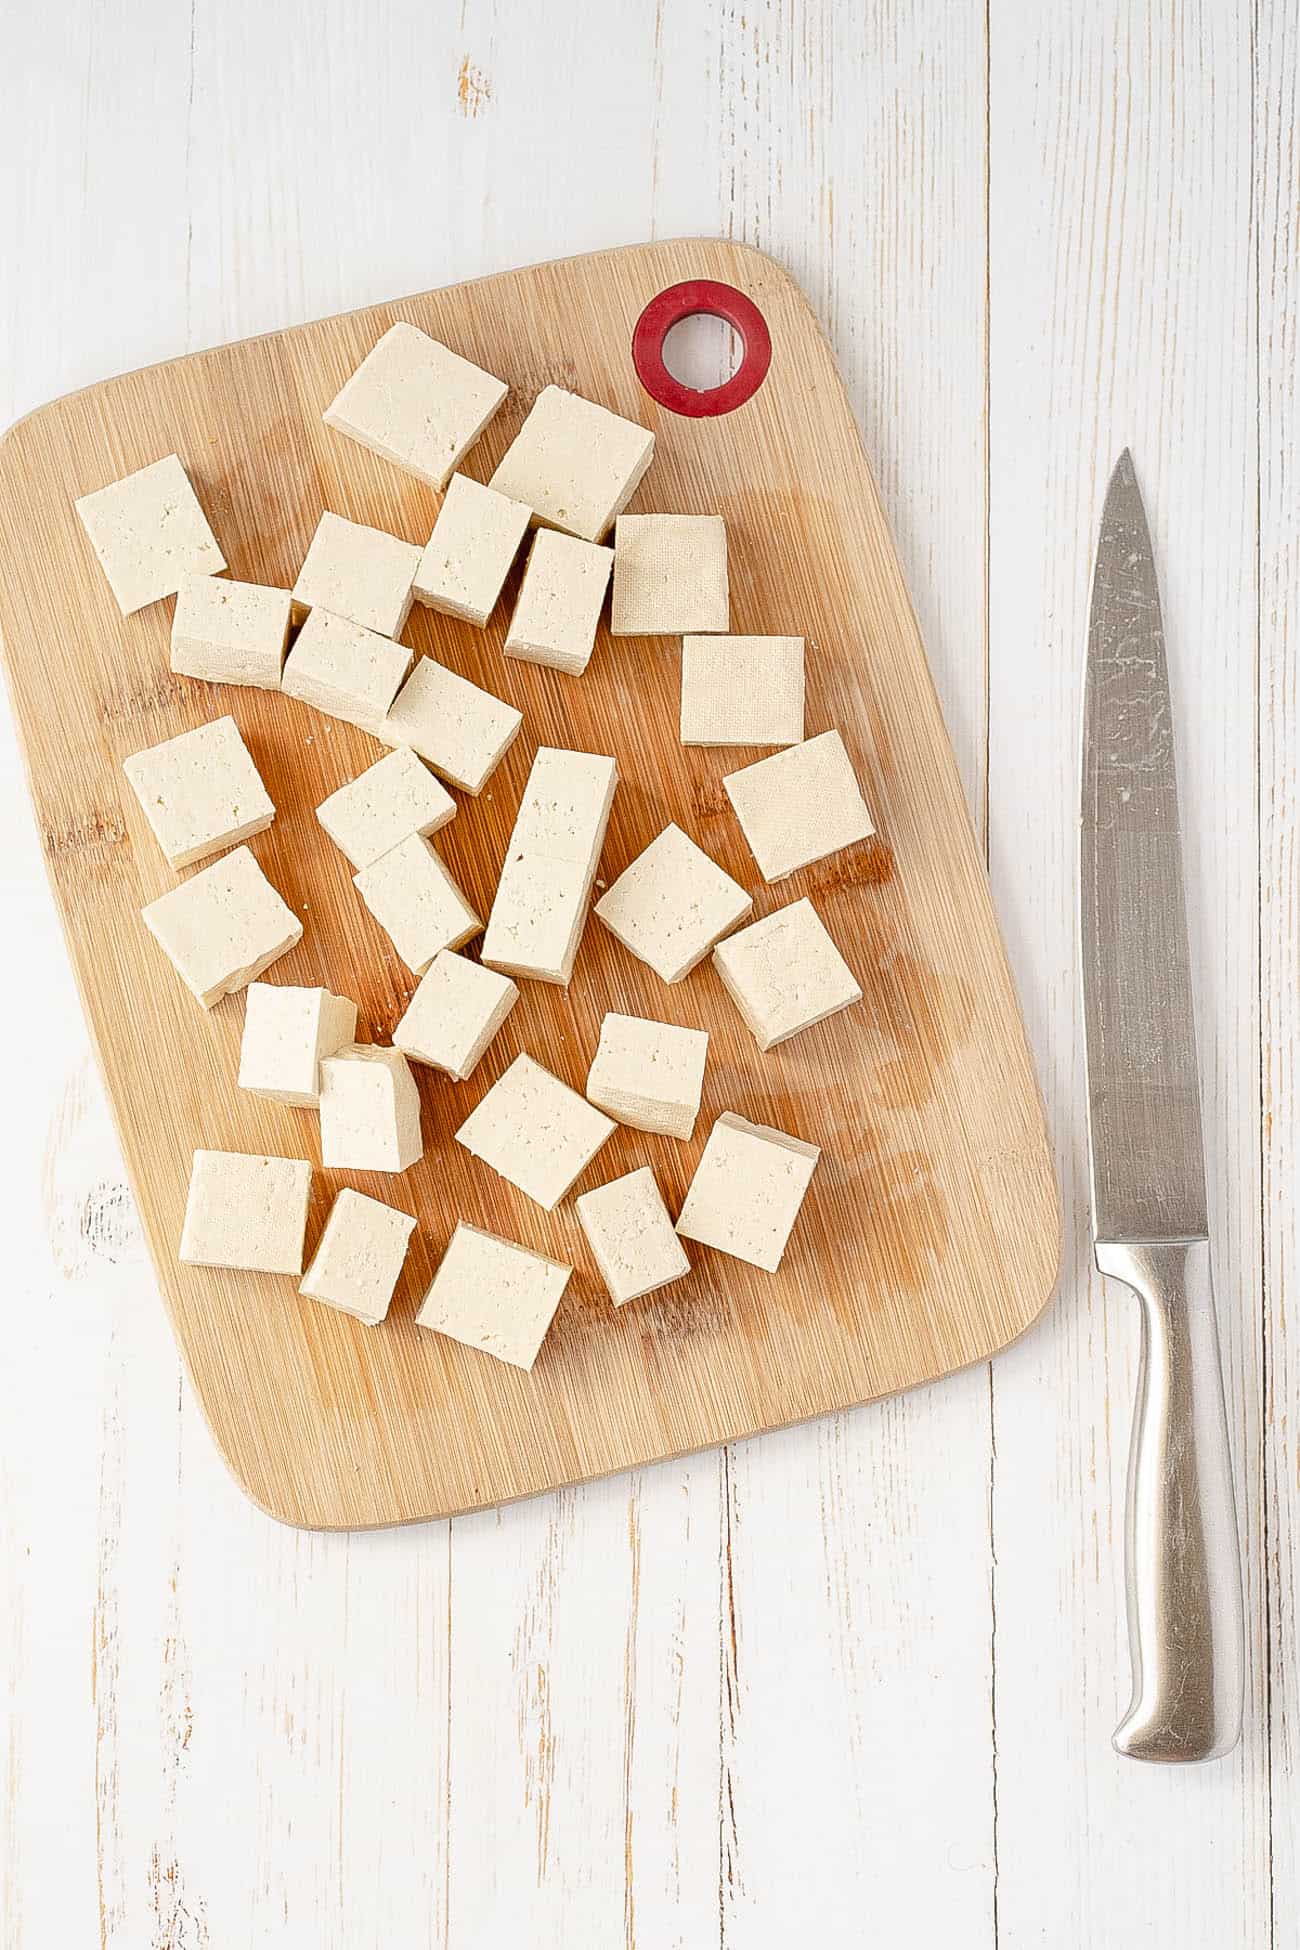 chopped tofu on a cutting board